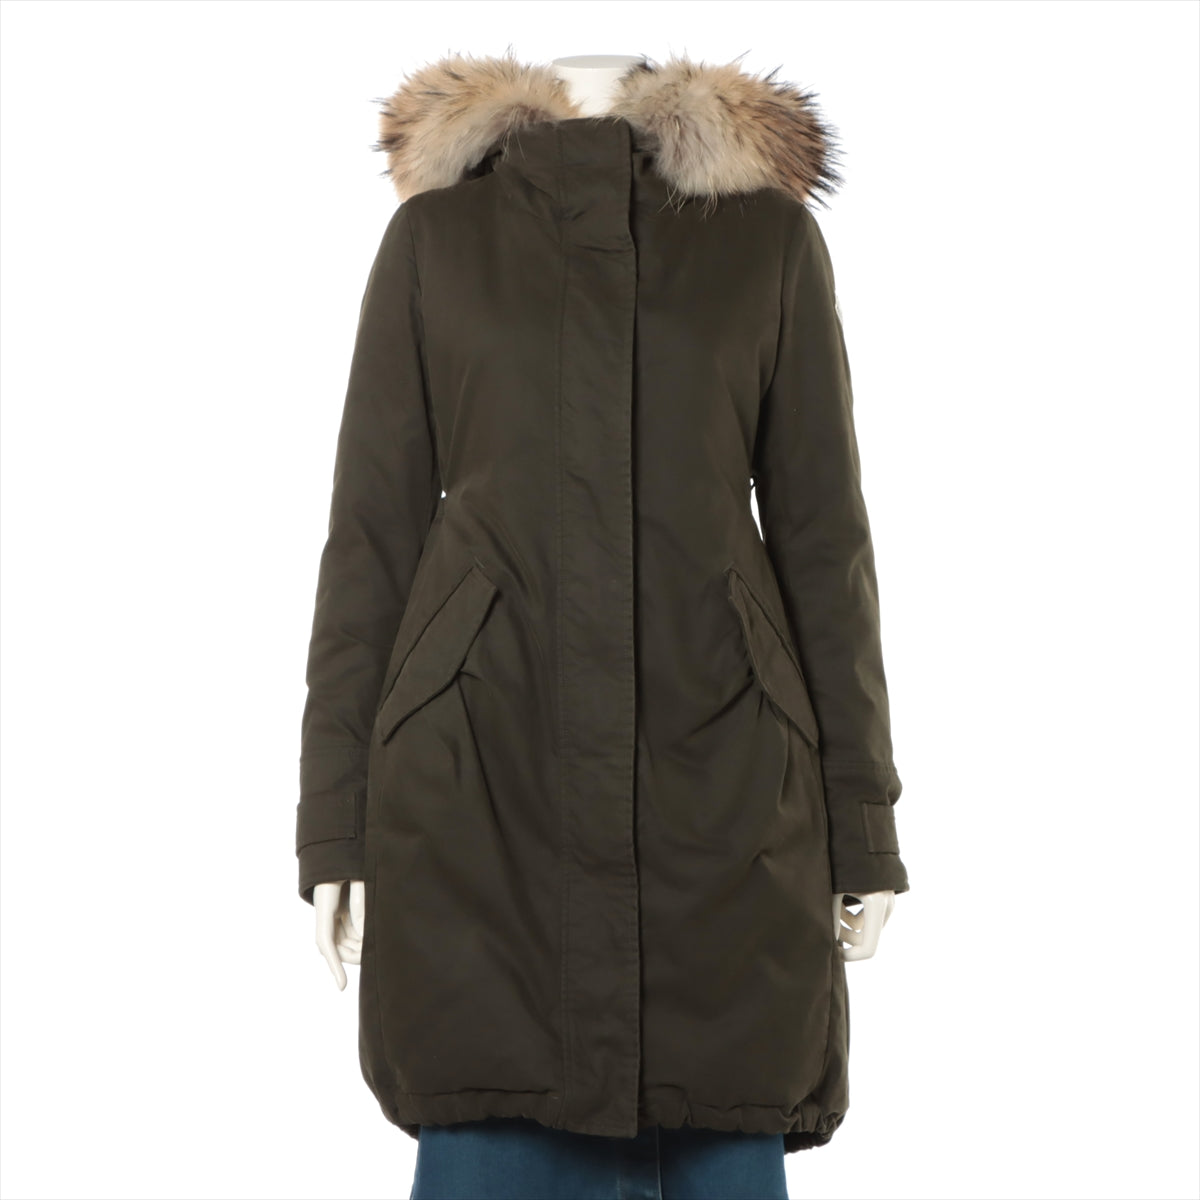 Moncler 16 years Cotton Down coat 1 Ladies' Khaki  EVANTHIA Removable fur